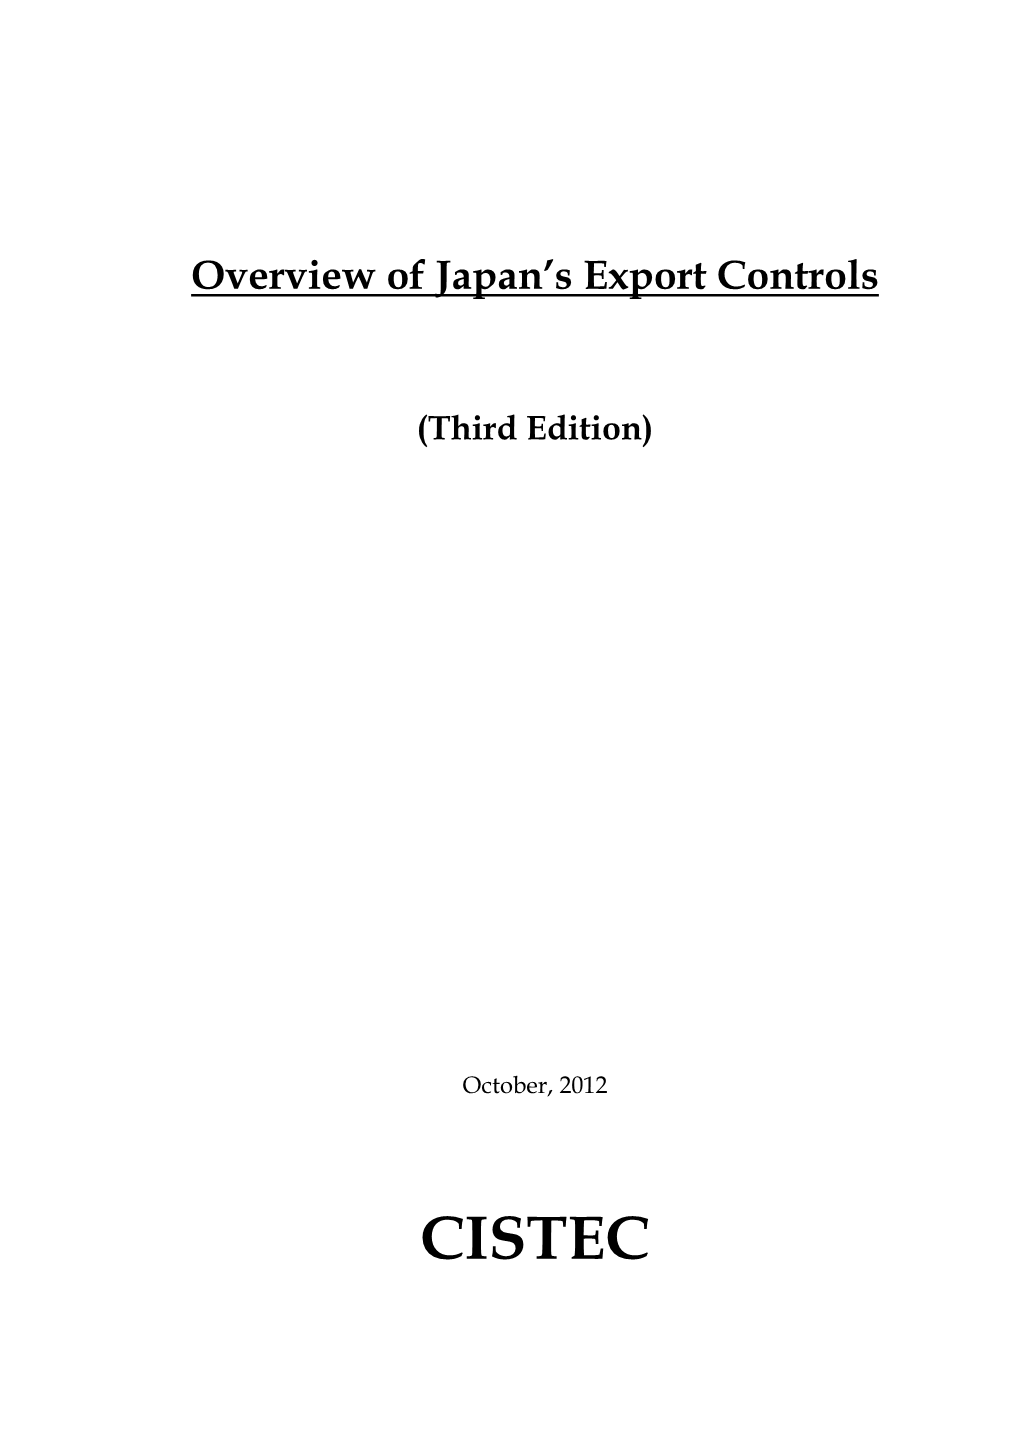 Japan's Export Control Details